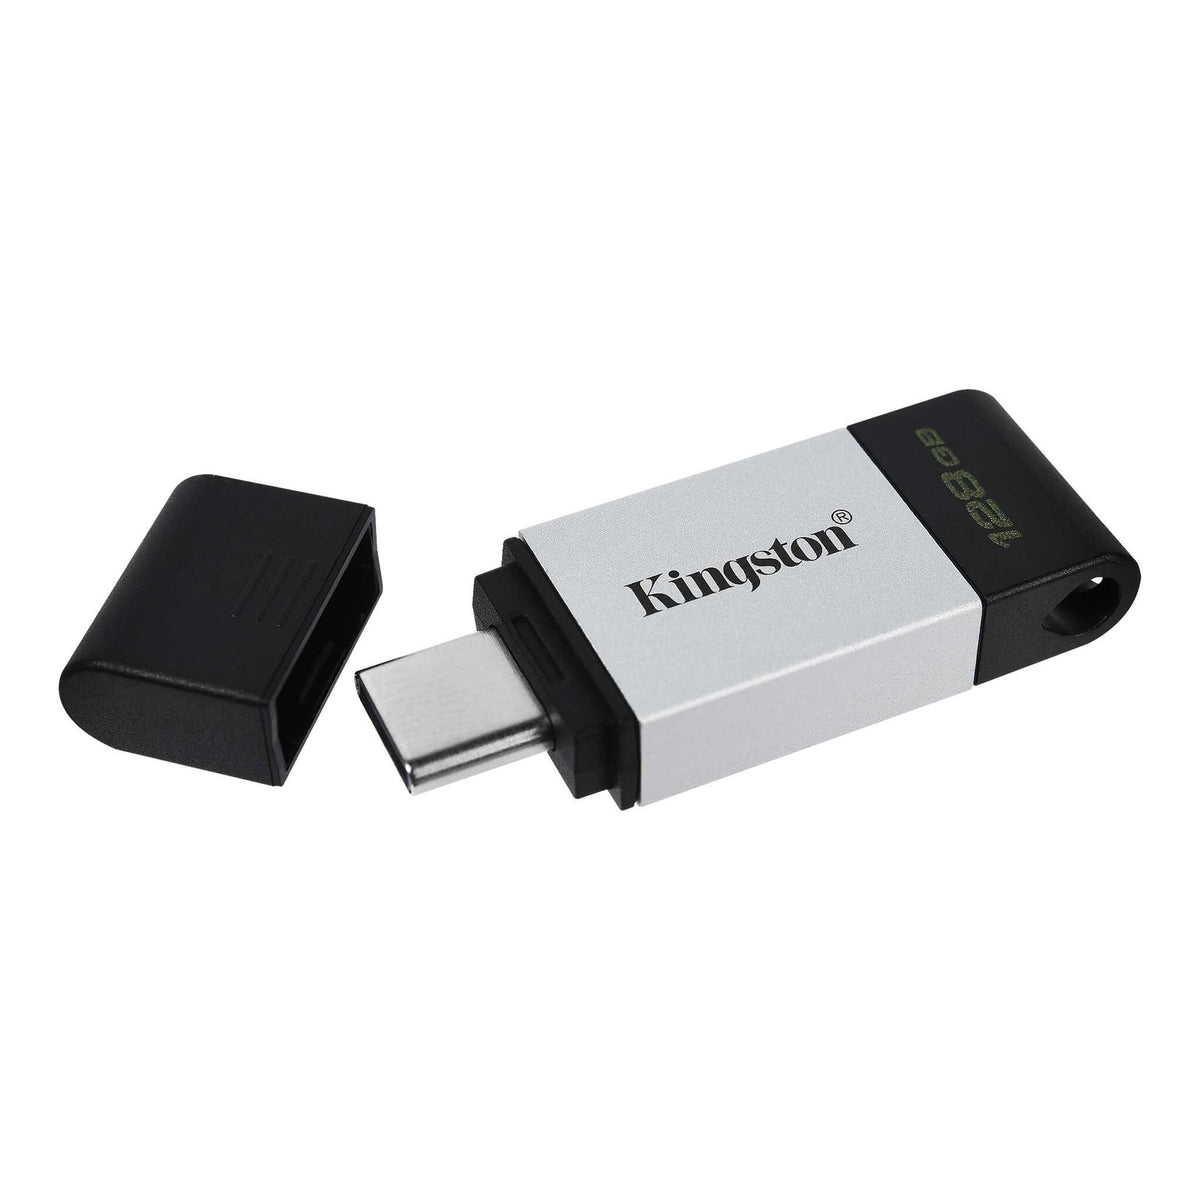 USB kľúč 128GB Kingston DT80, 3.2 (DT80/128GB)